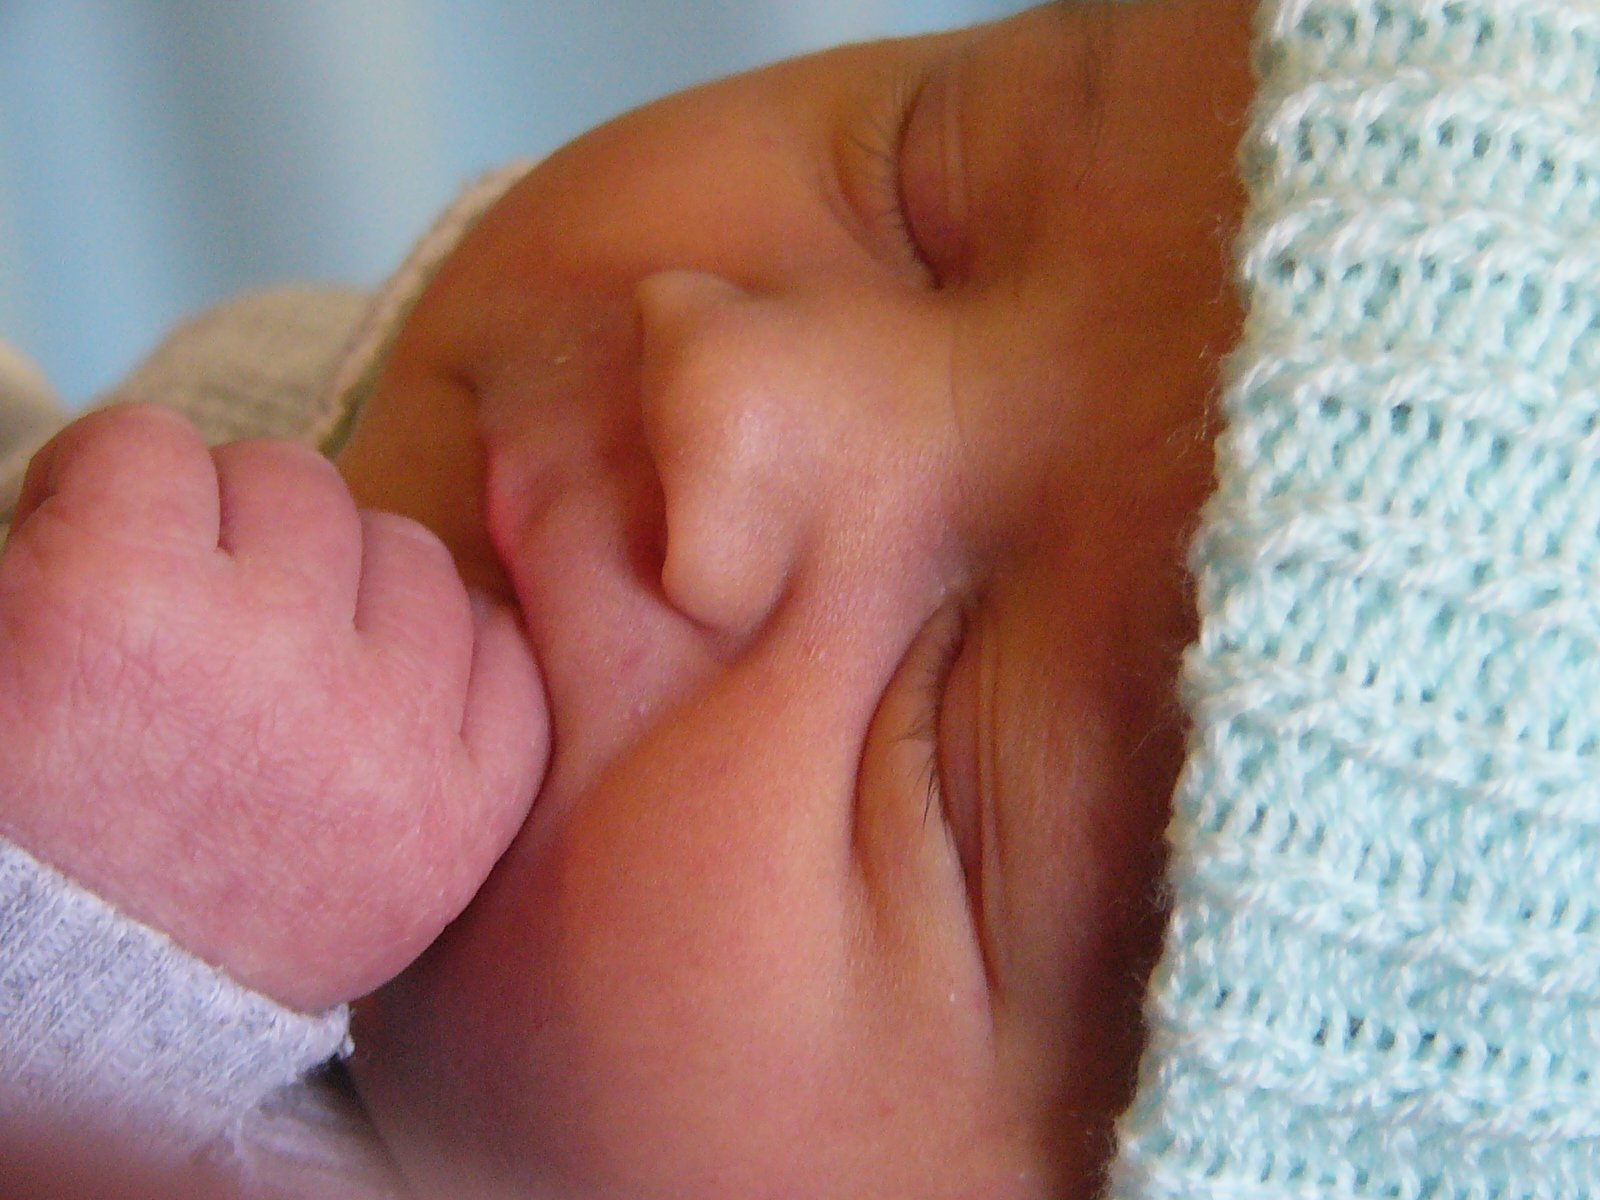 newborn infant child care protection